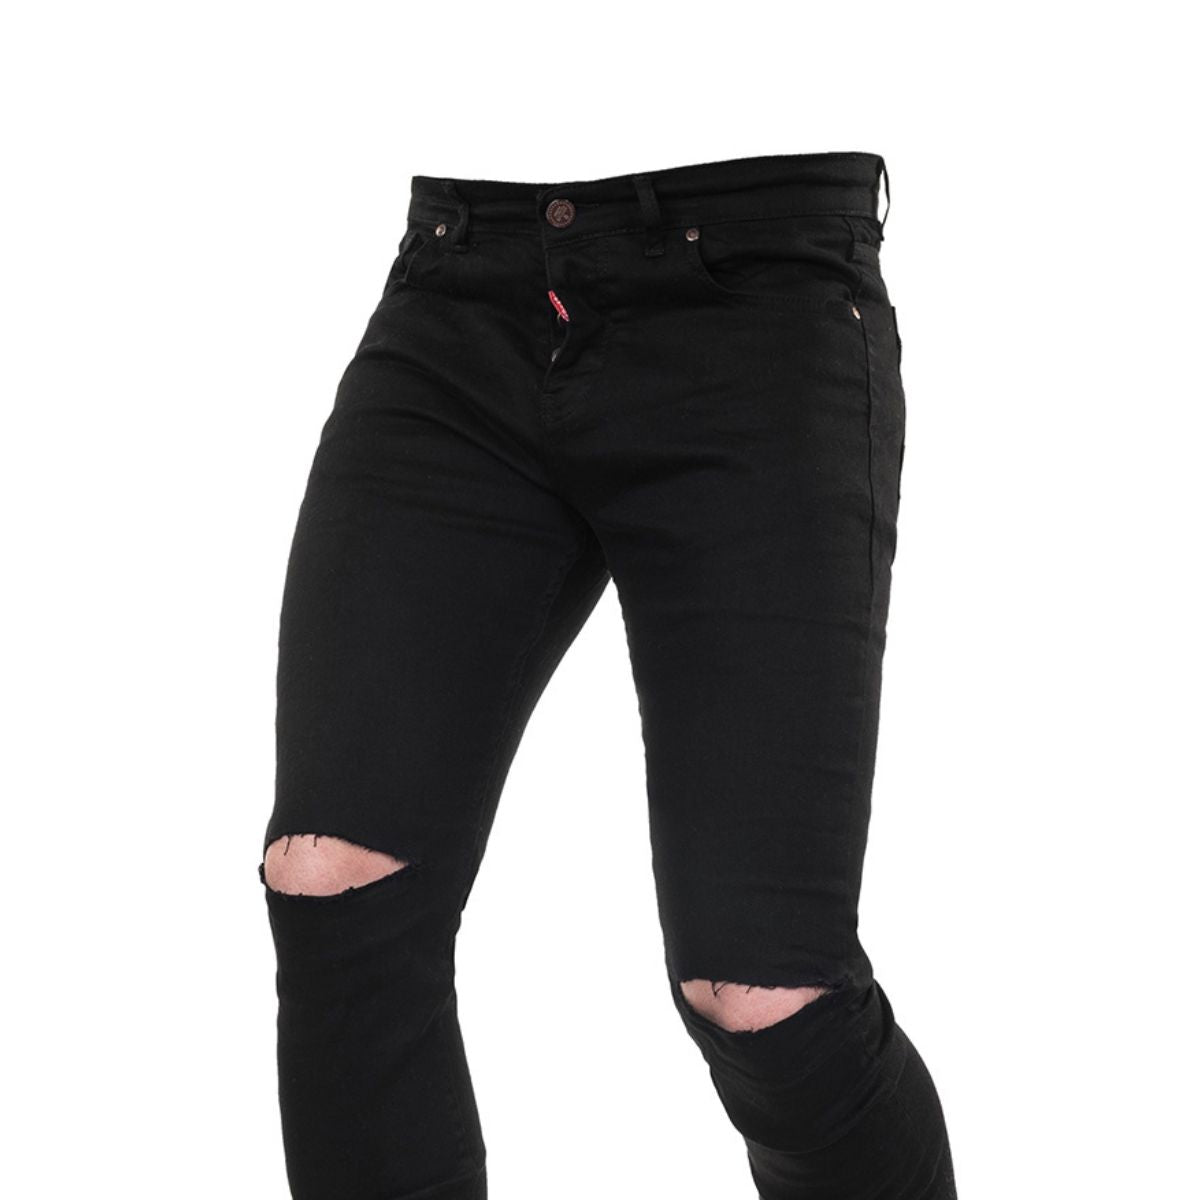 Jeans Μαύρο με Σκισίματα στα Γόνατα (115) - BLACK - Panda Clothing